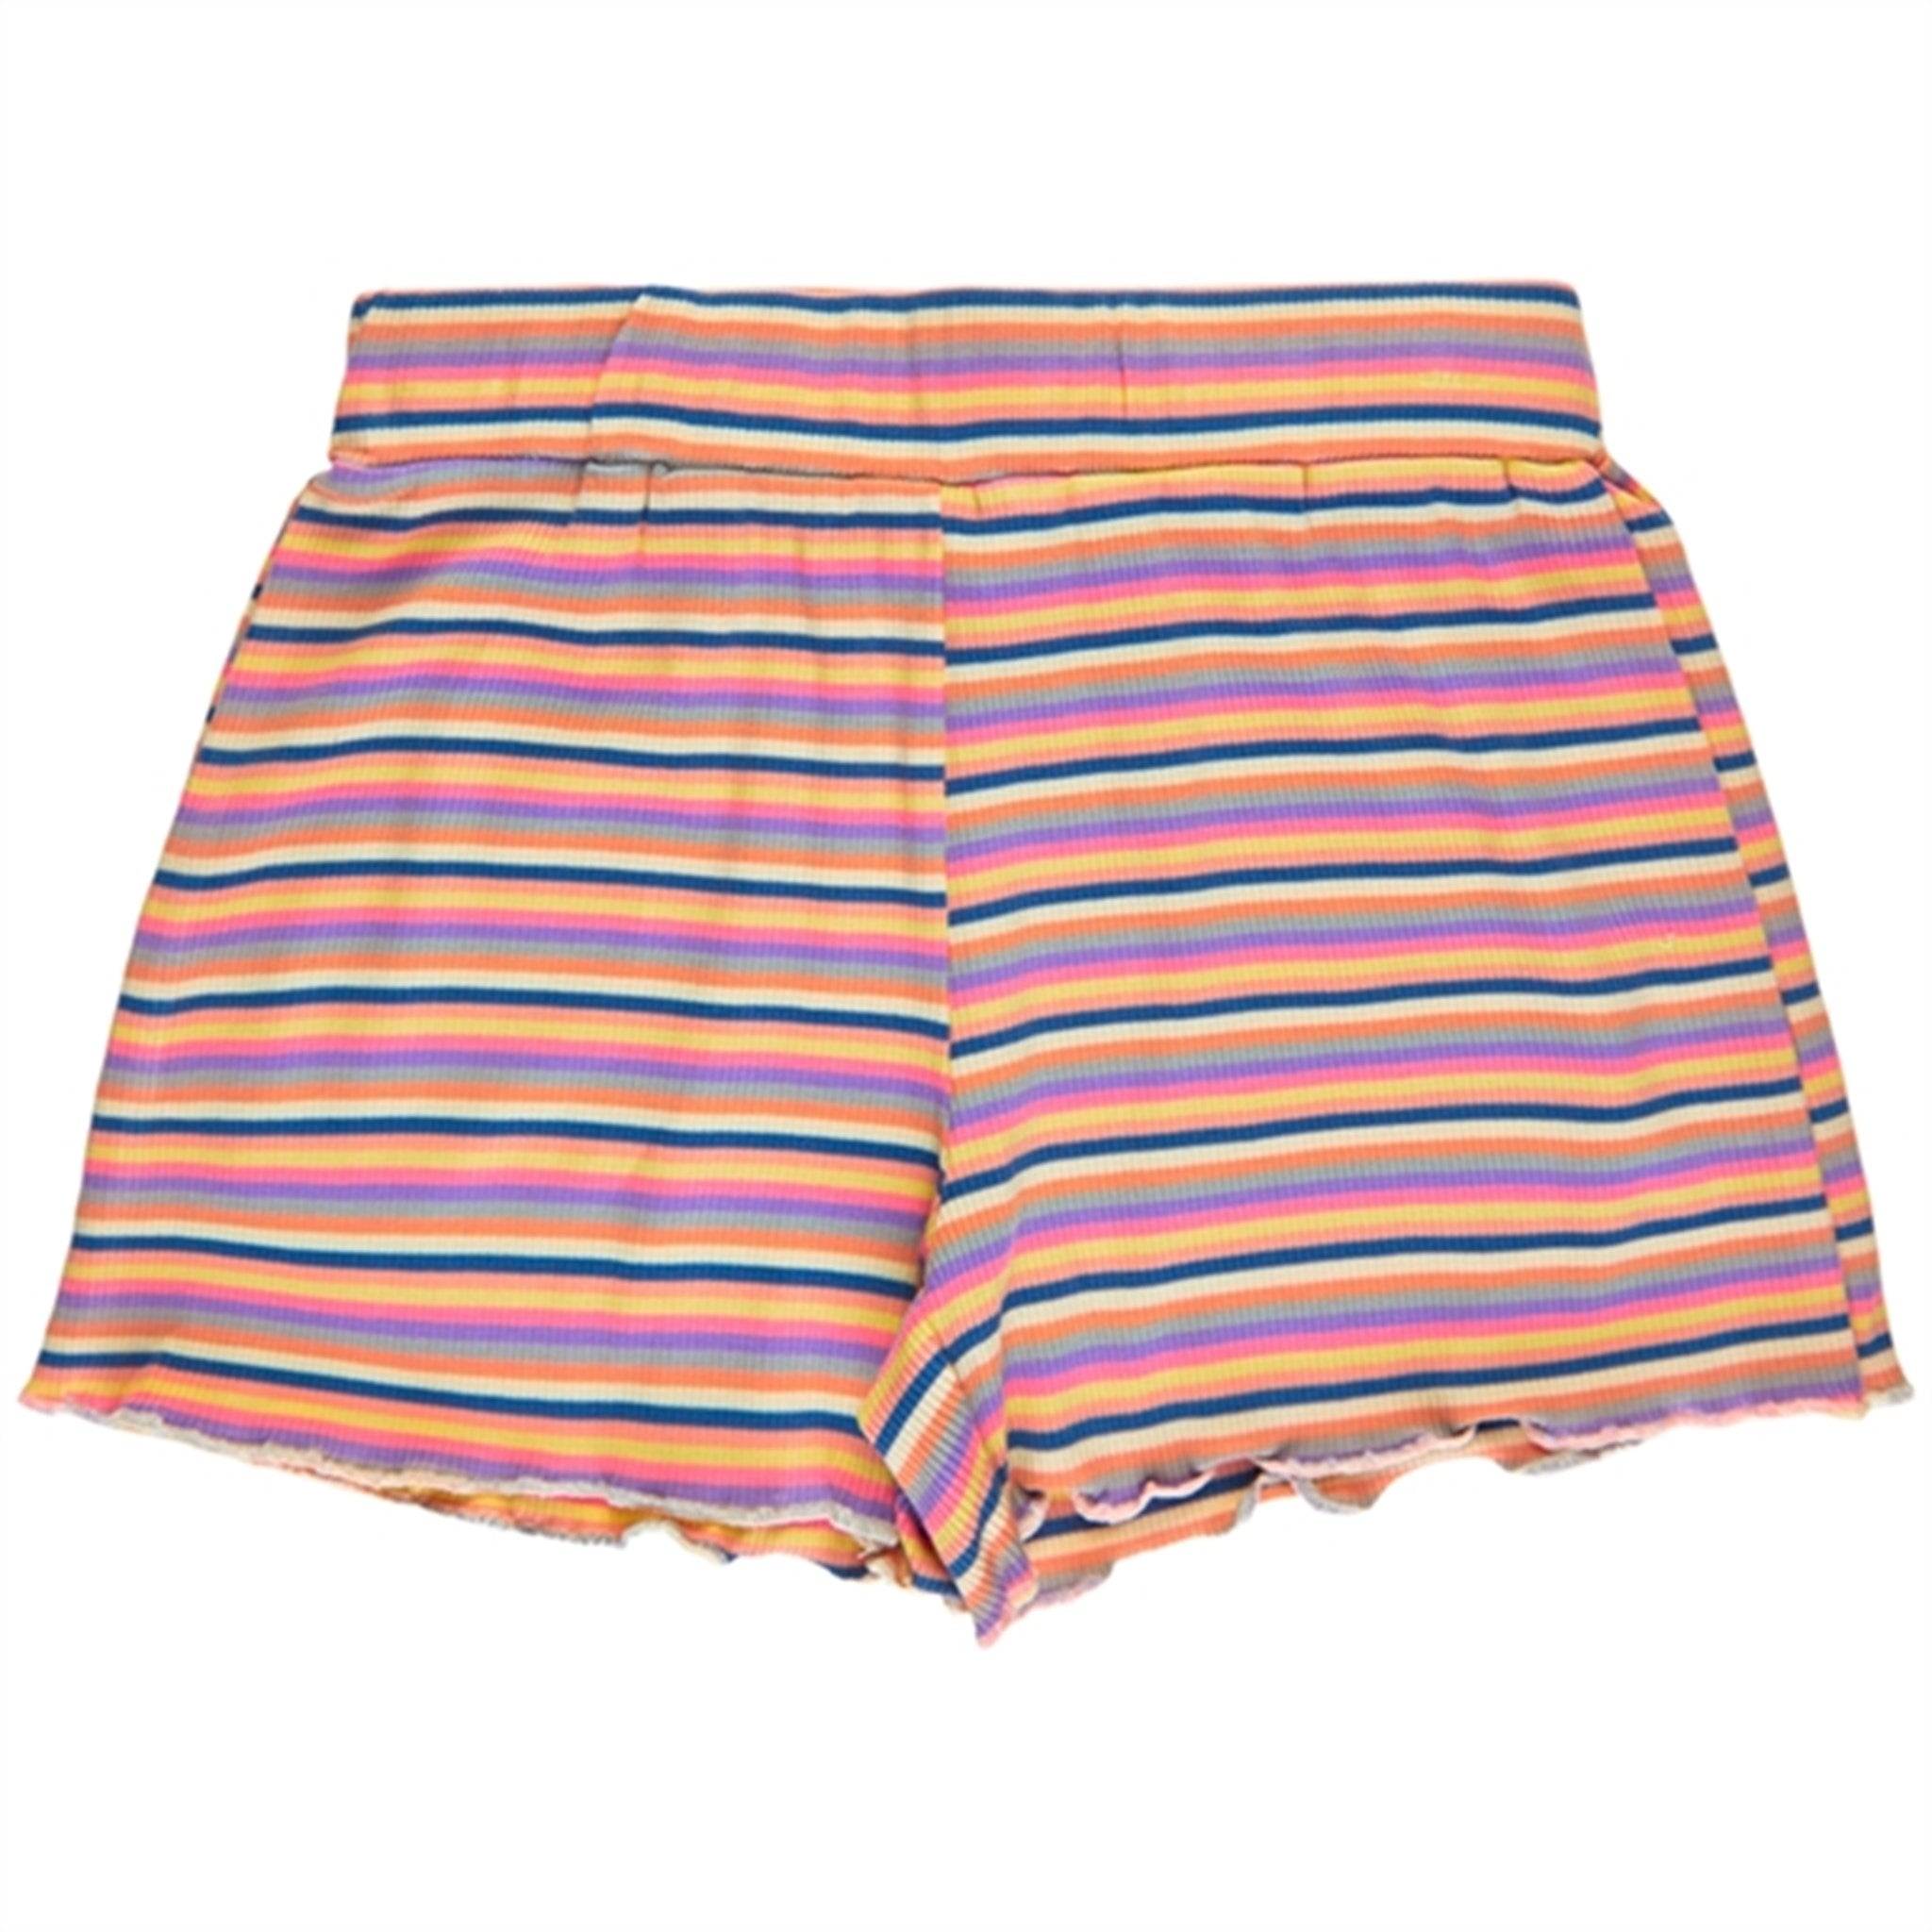 THE NEW Multi Stripe Gola Rib Shorts